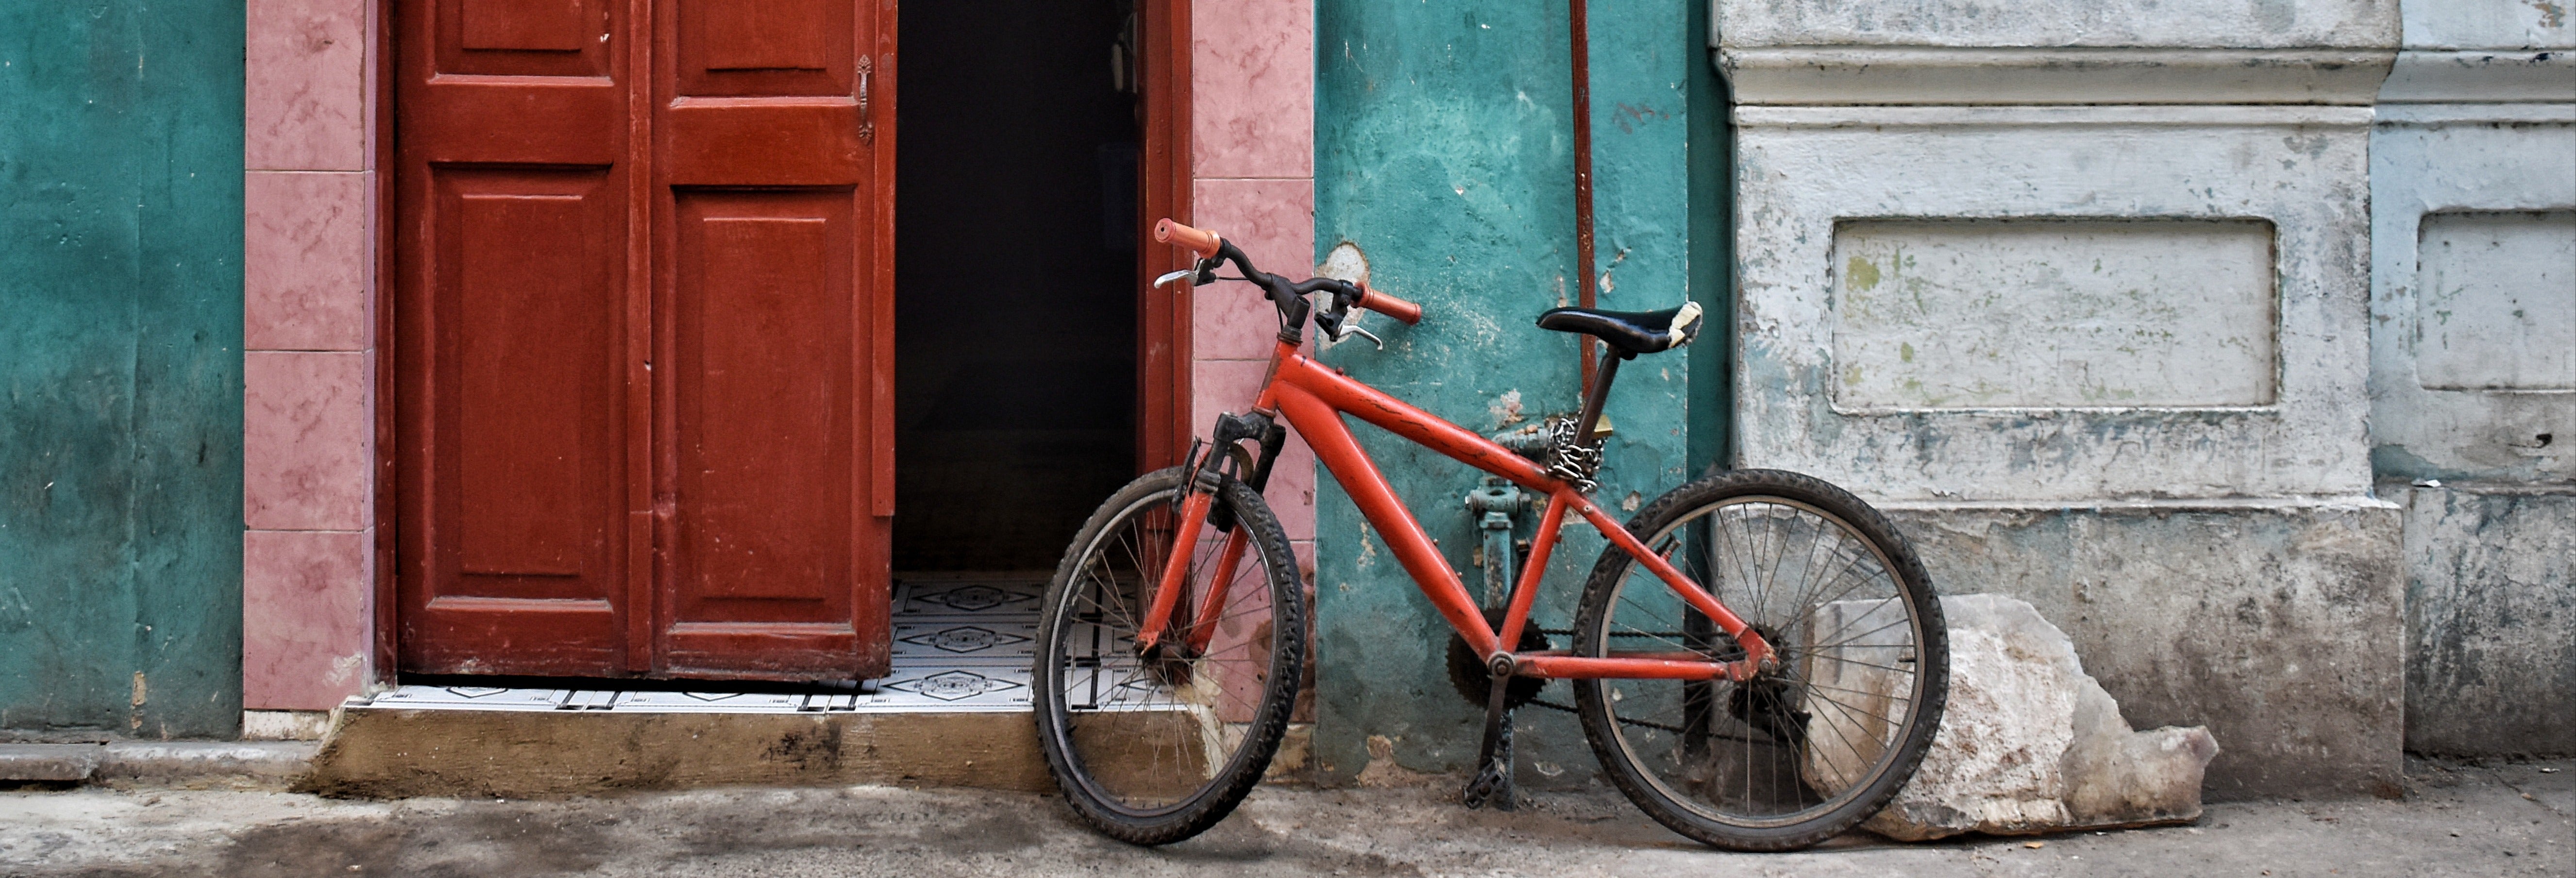 Tour de bicicleta por Havana